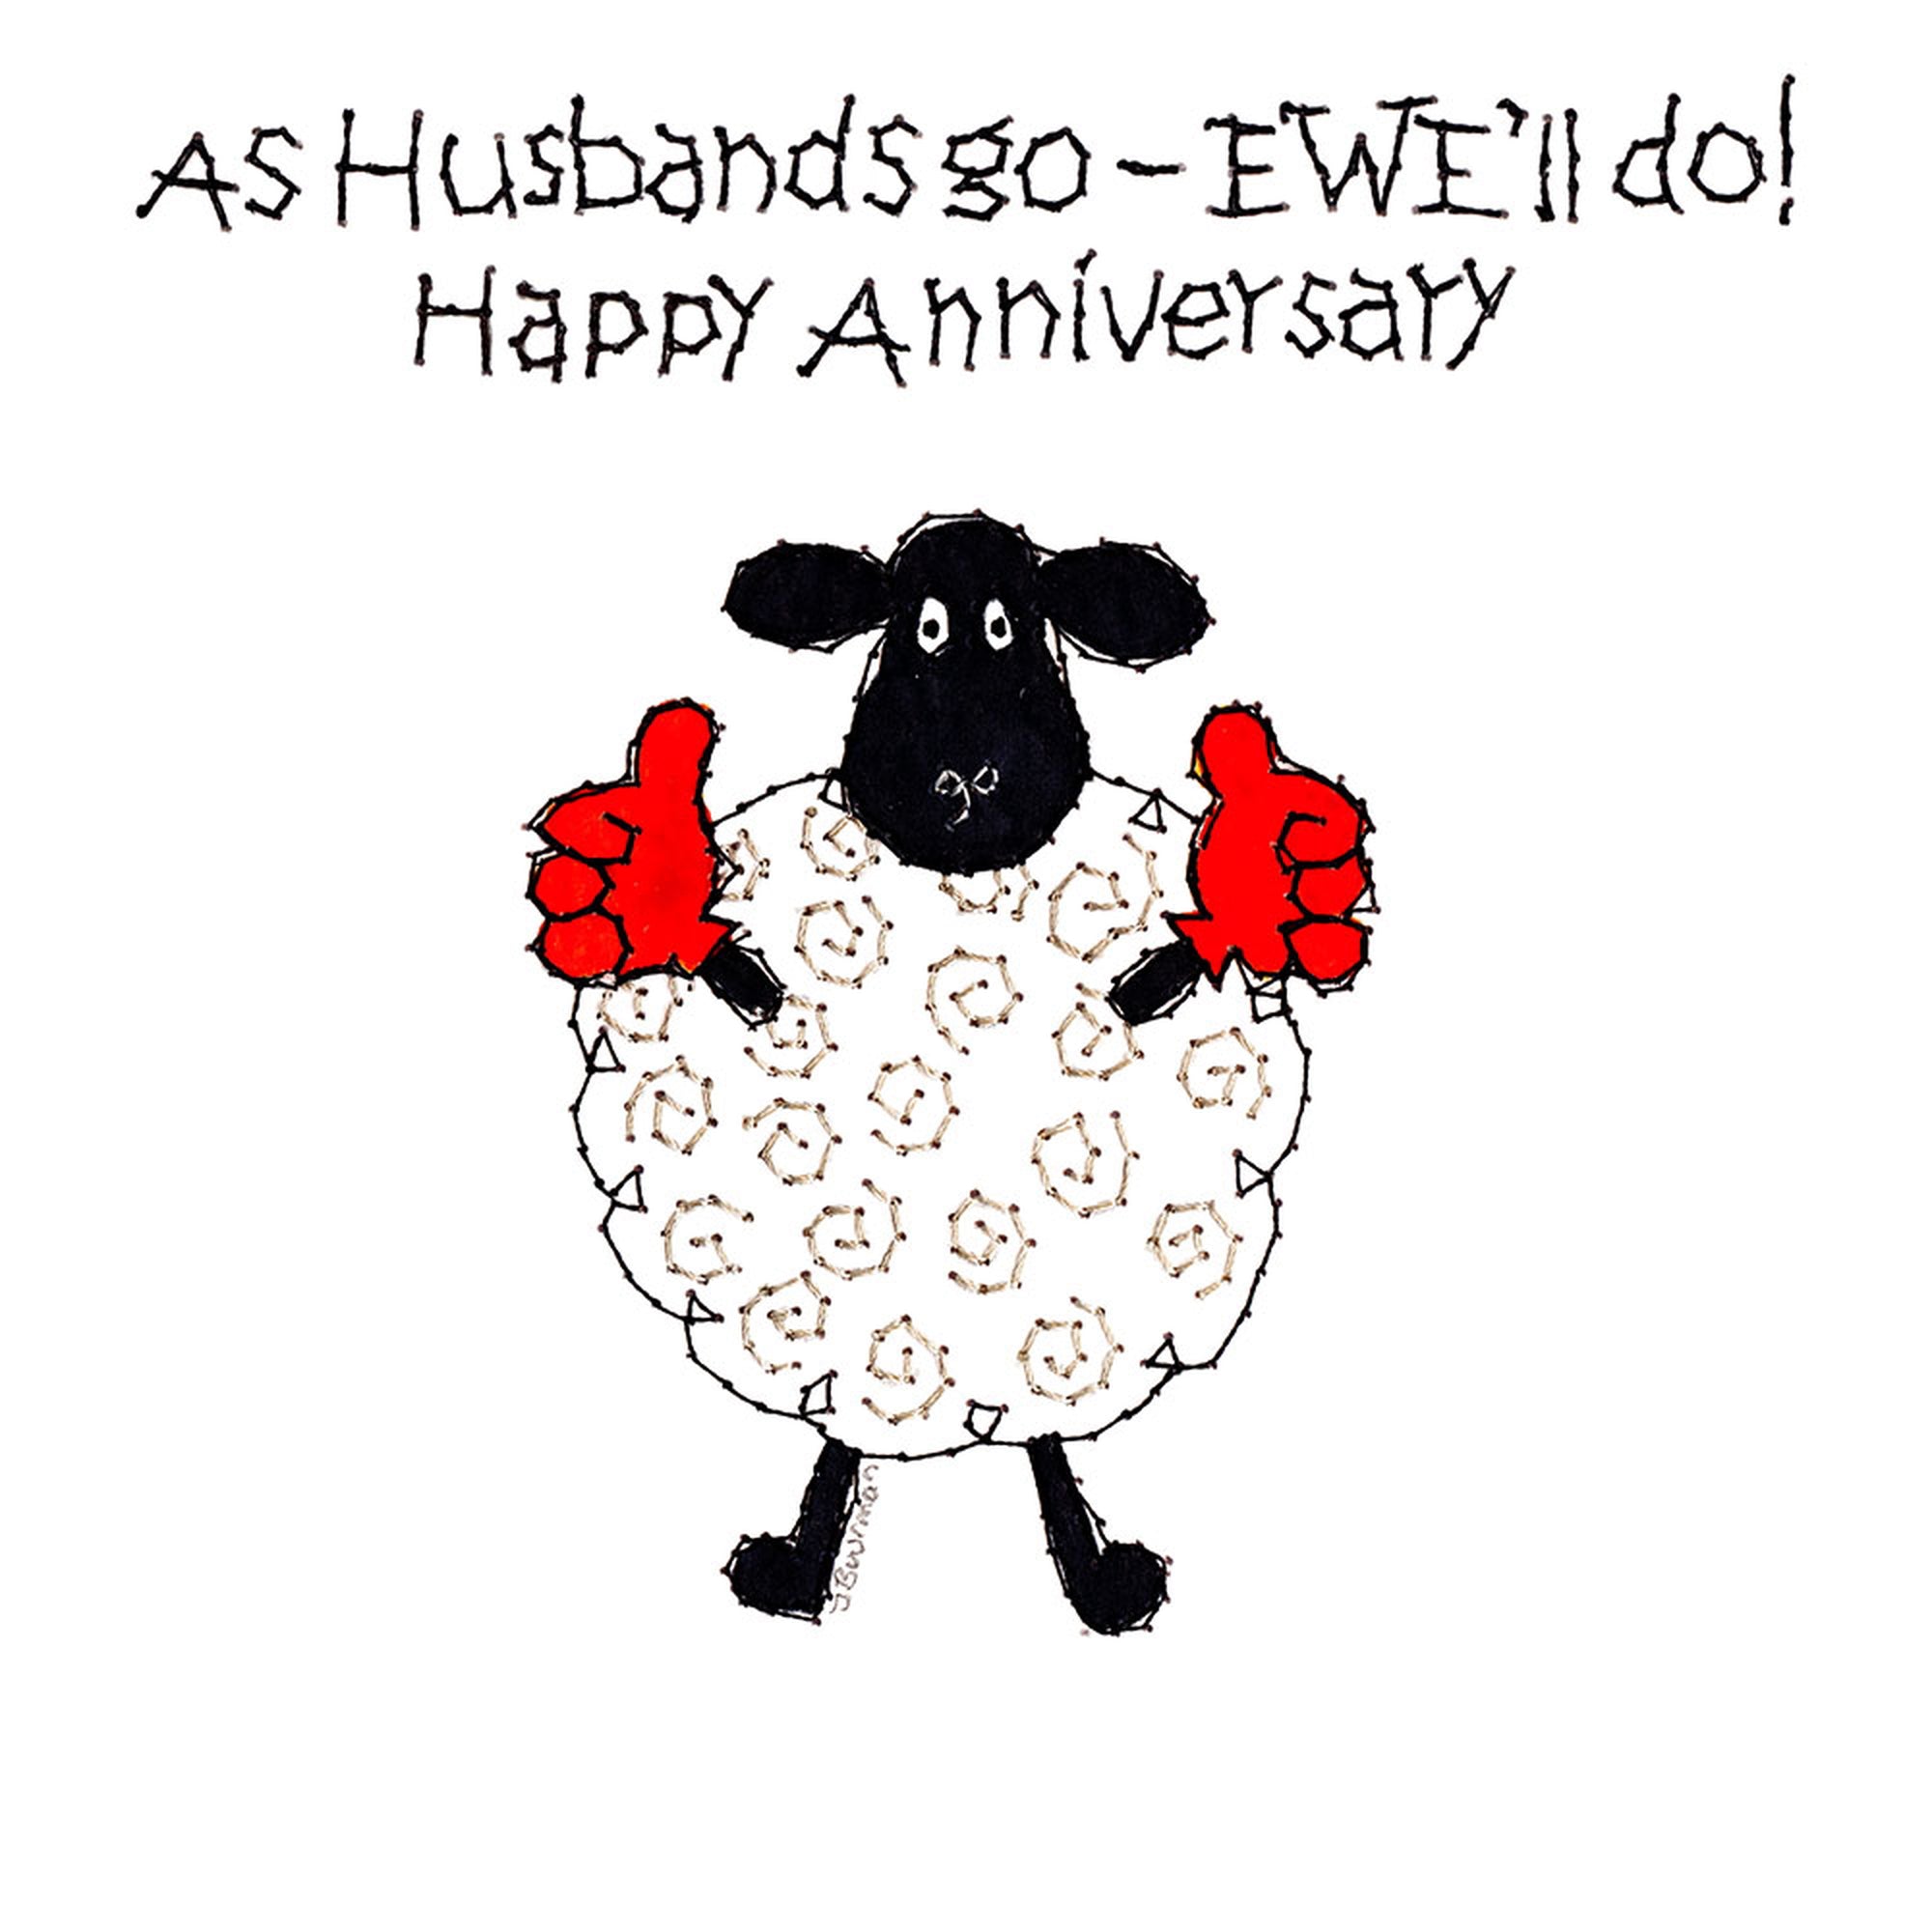 Ewe'll Do Husband Anniversary Card from Penny Black